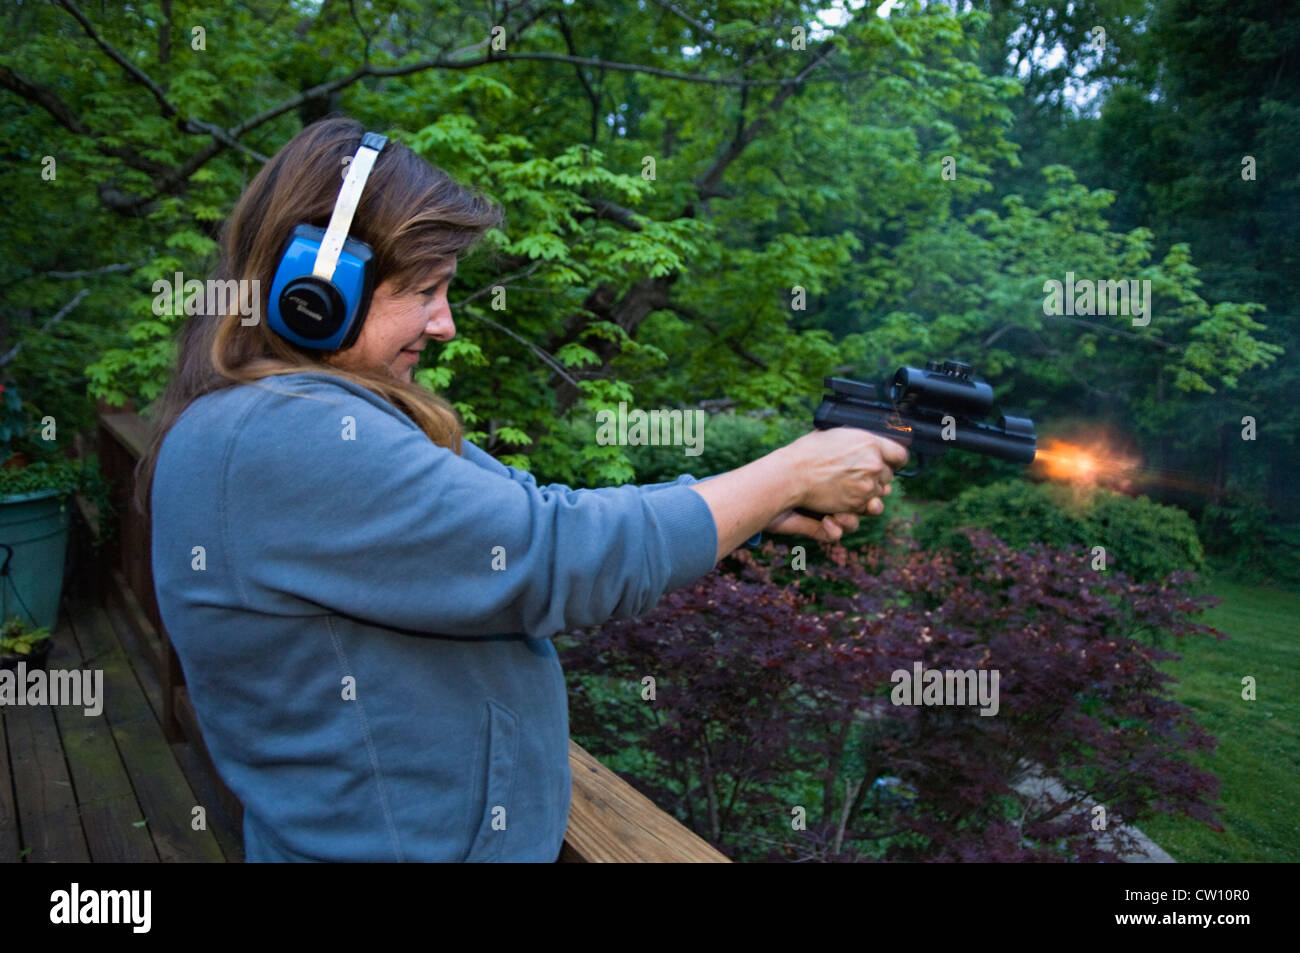 Woman Shooting a .22 Semi-automatic Pistol Stock Photo